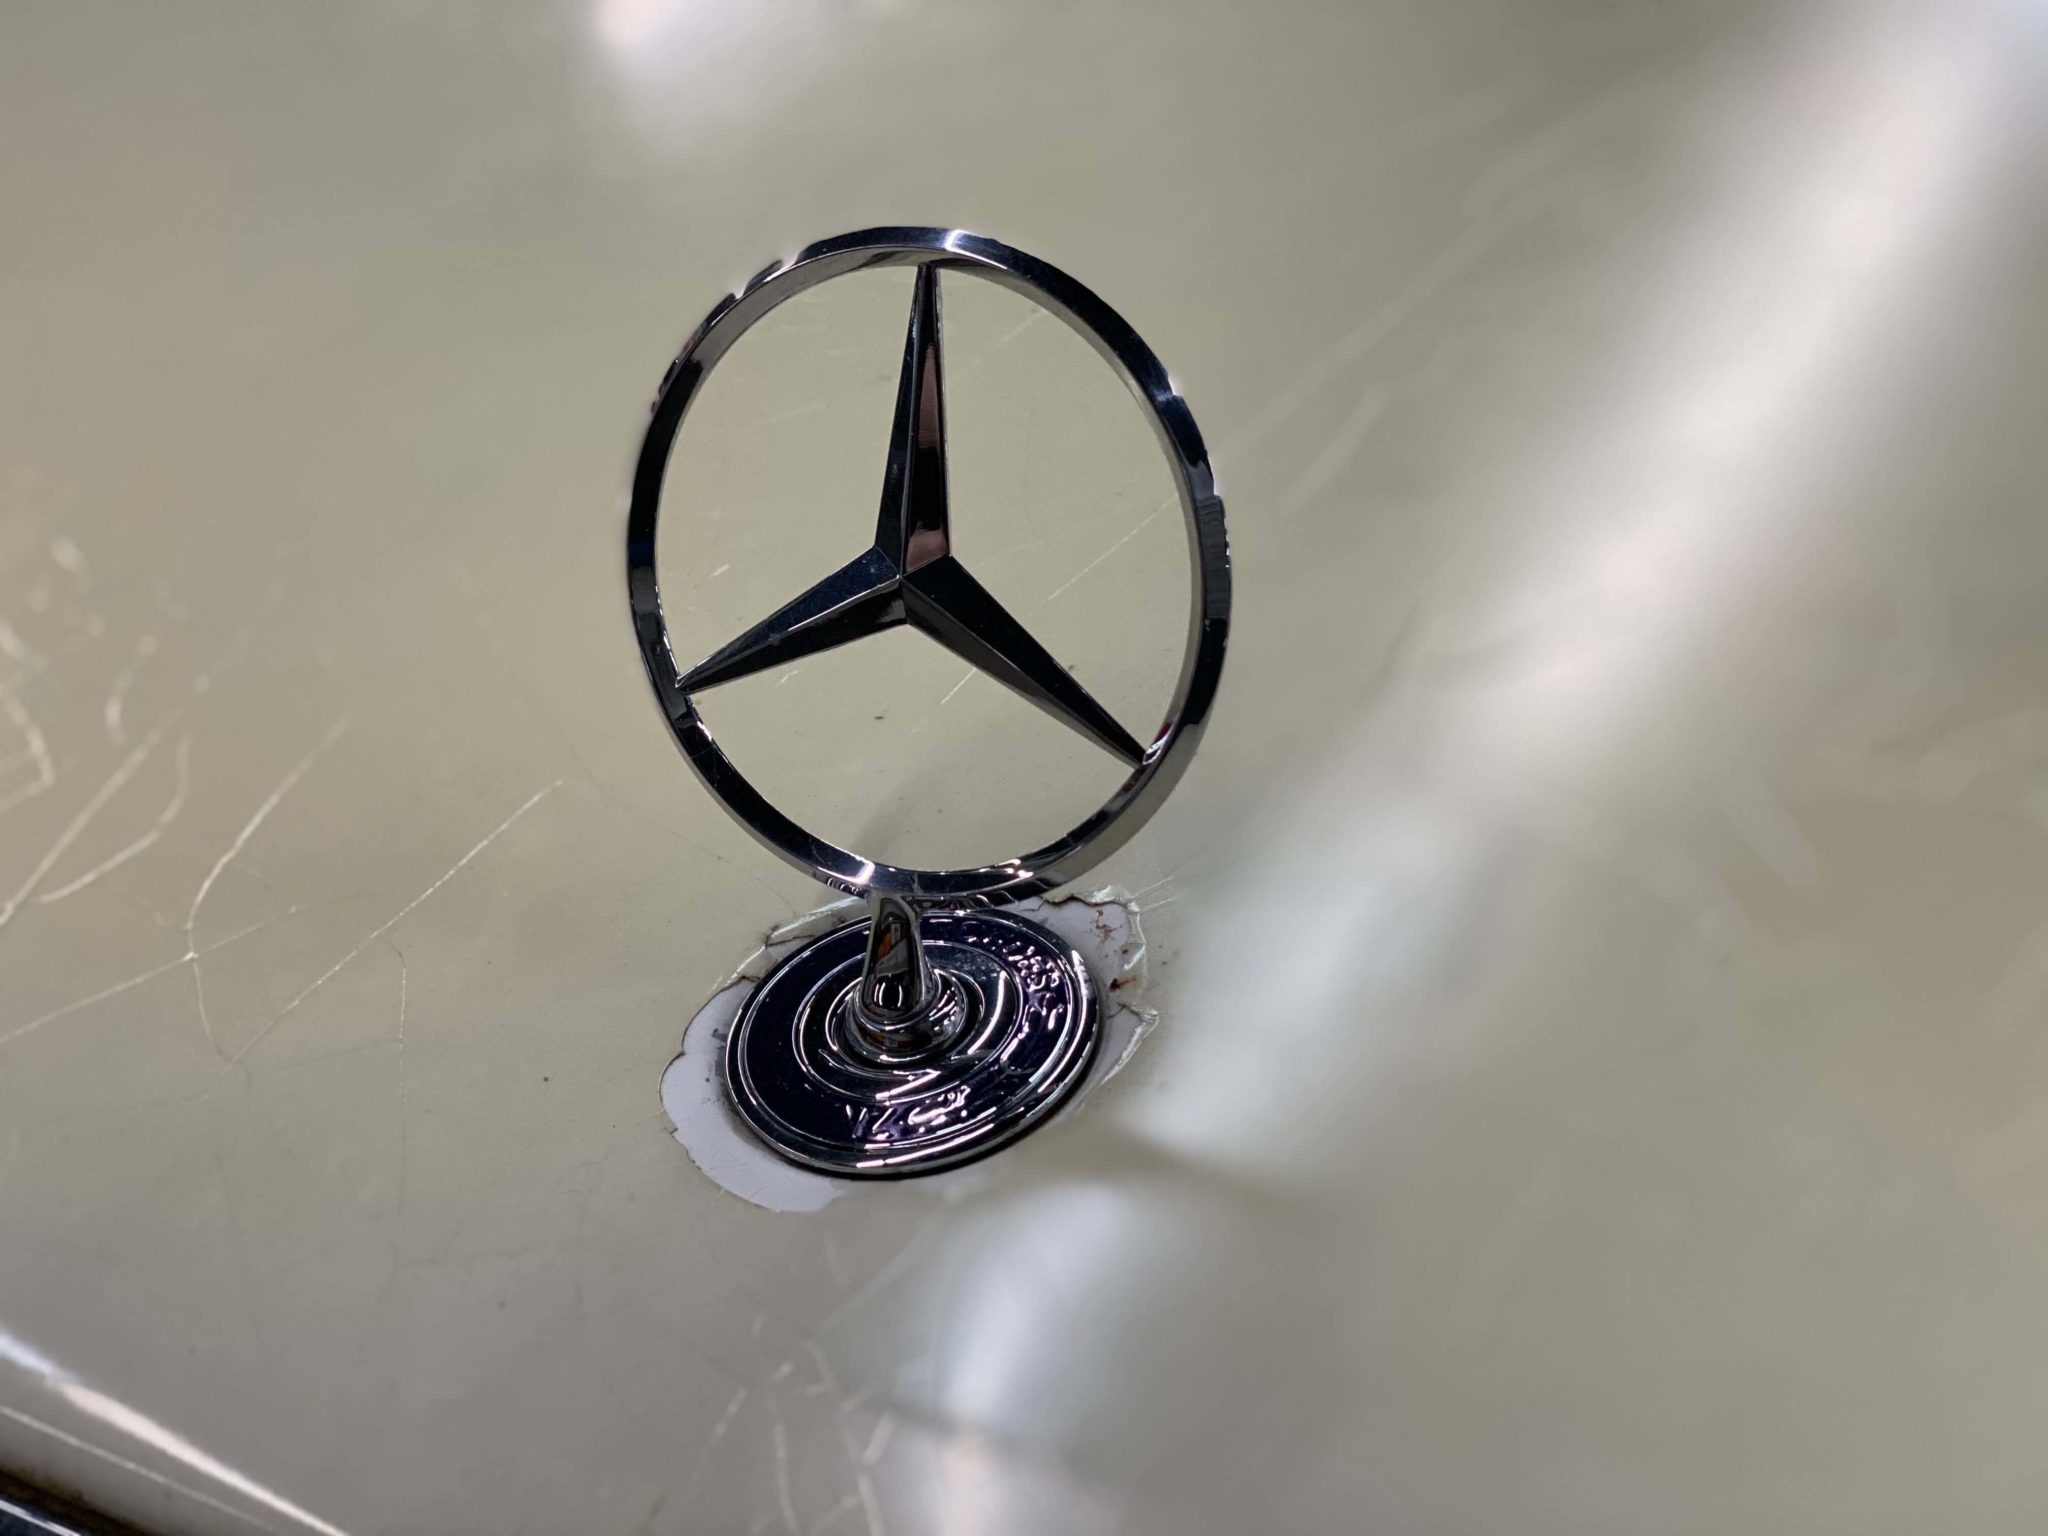 2002 Mercedes Benz S55 | Miles Through Time